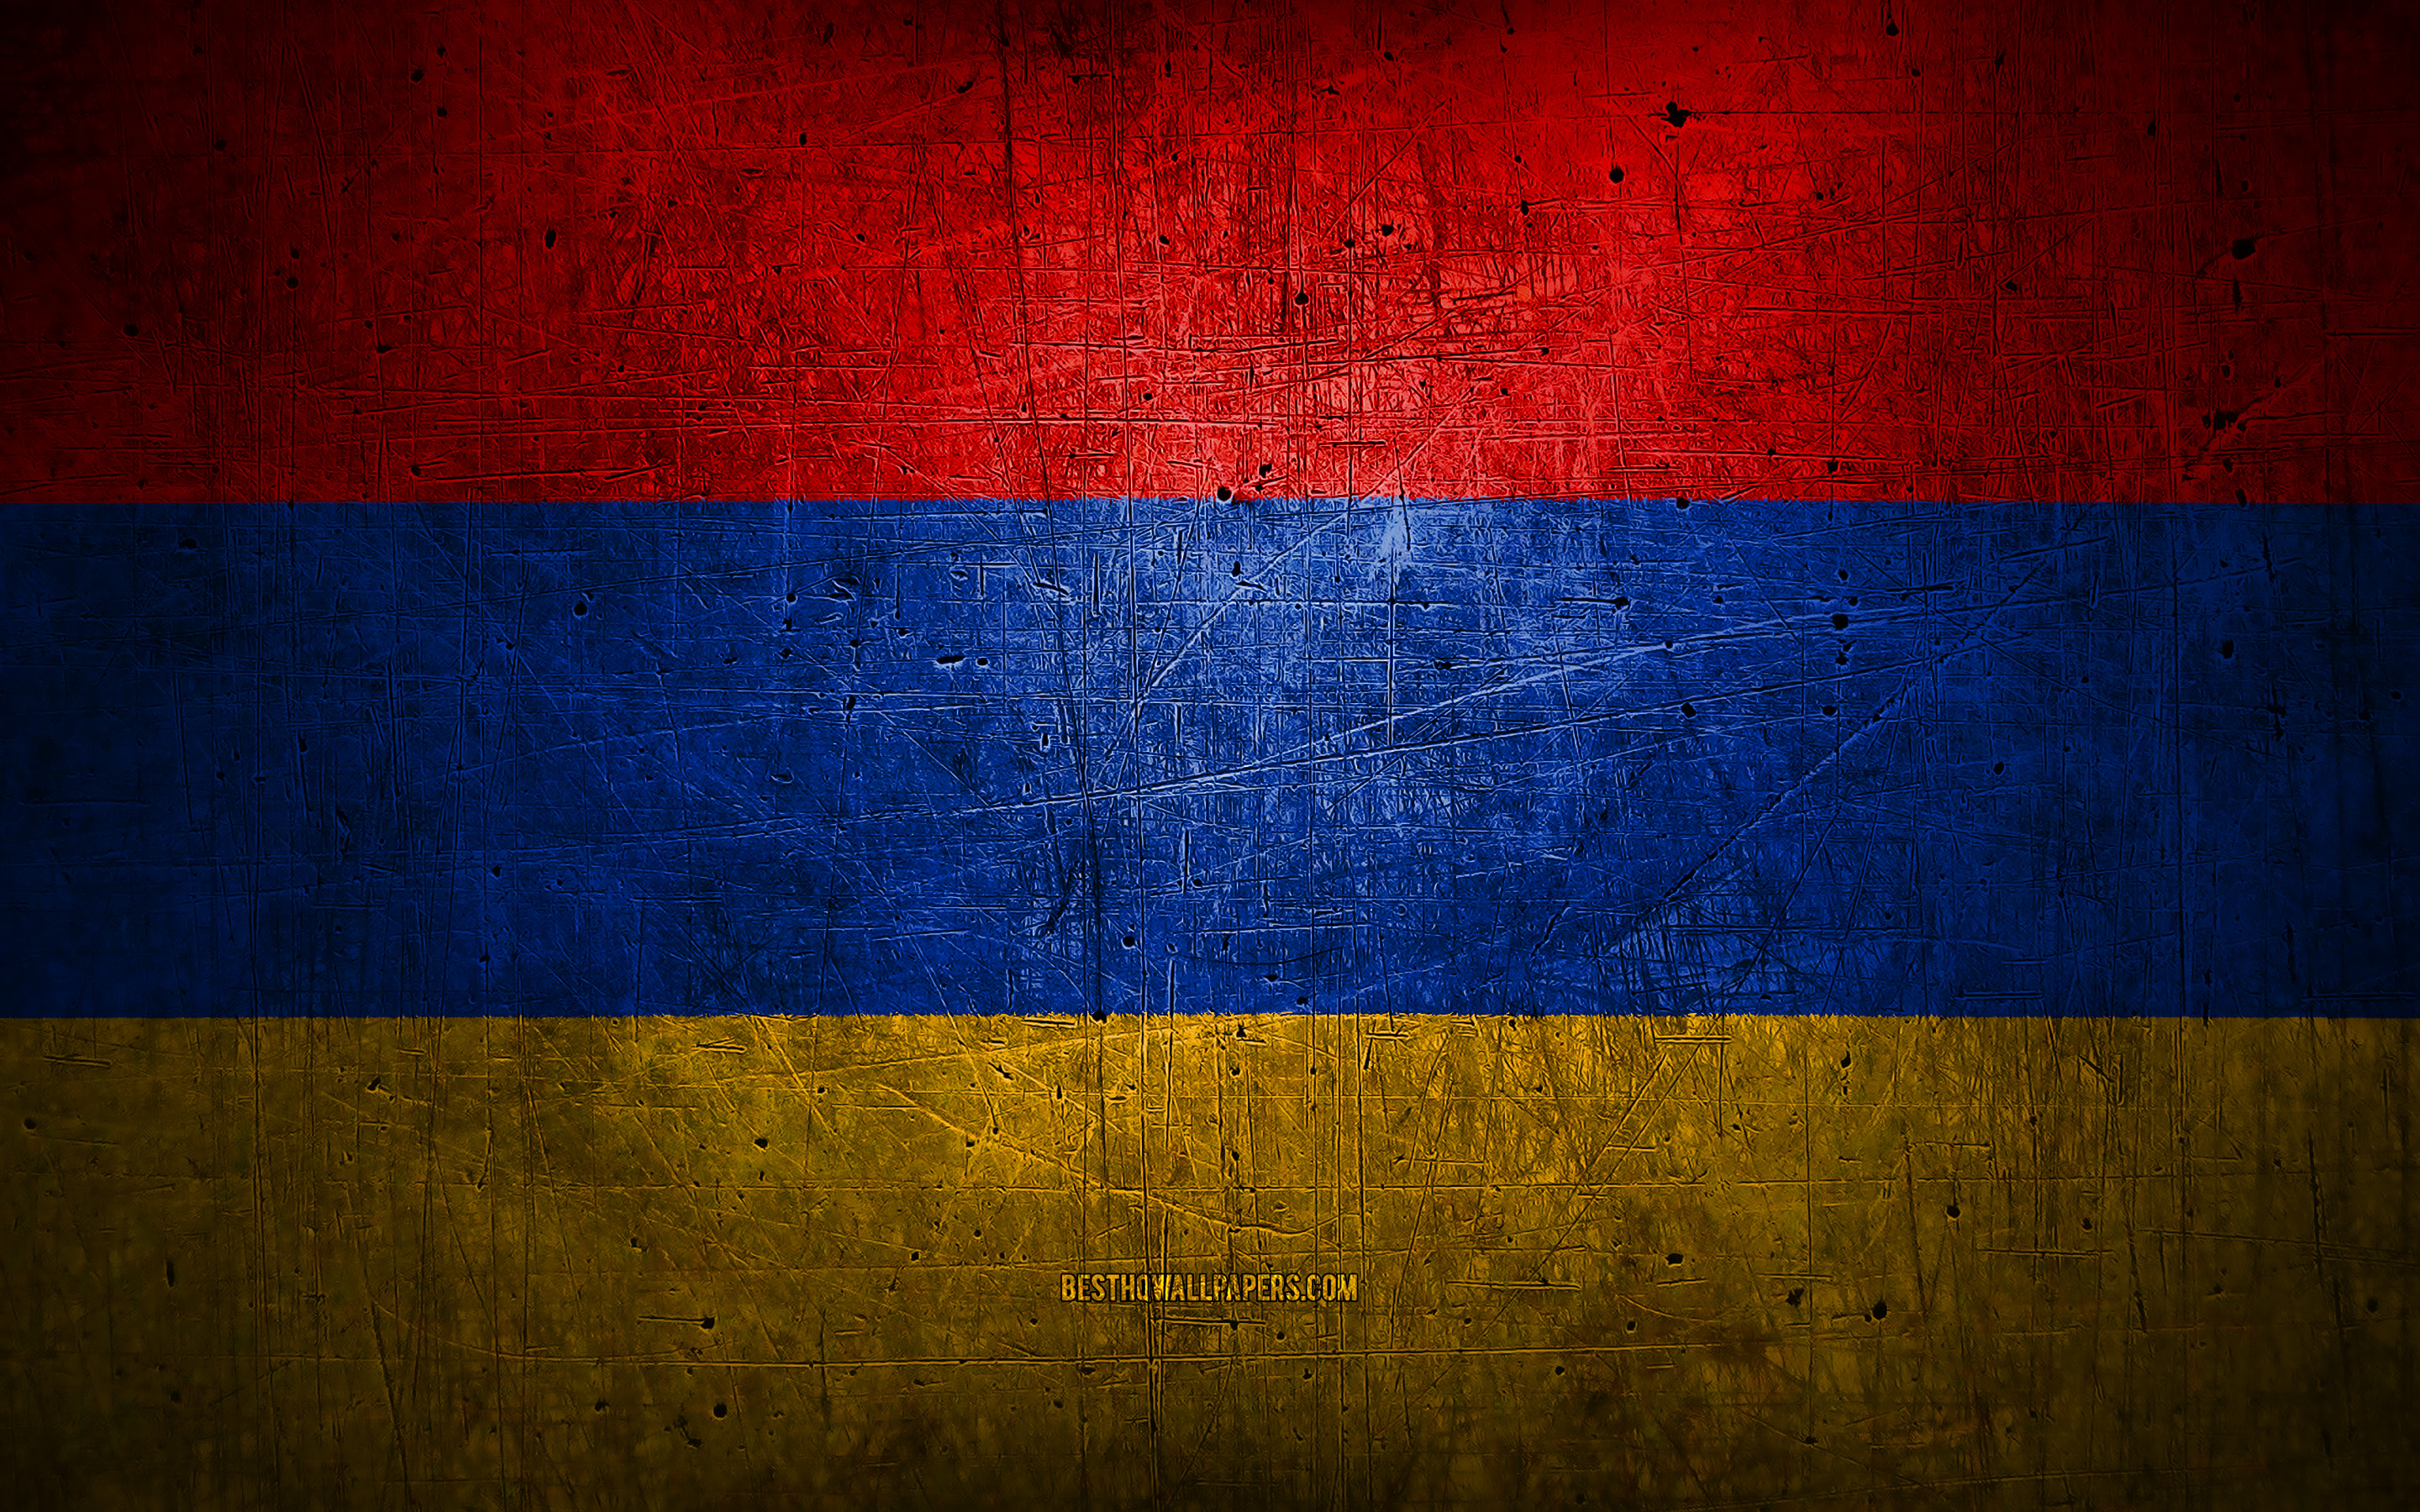 Armenia Flag Wallpapers